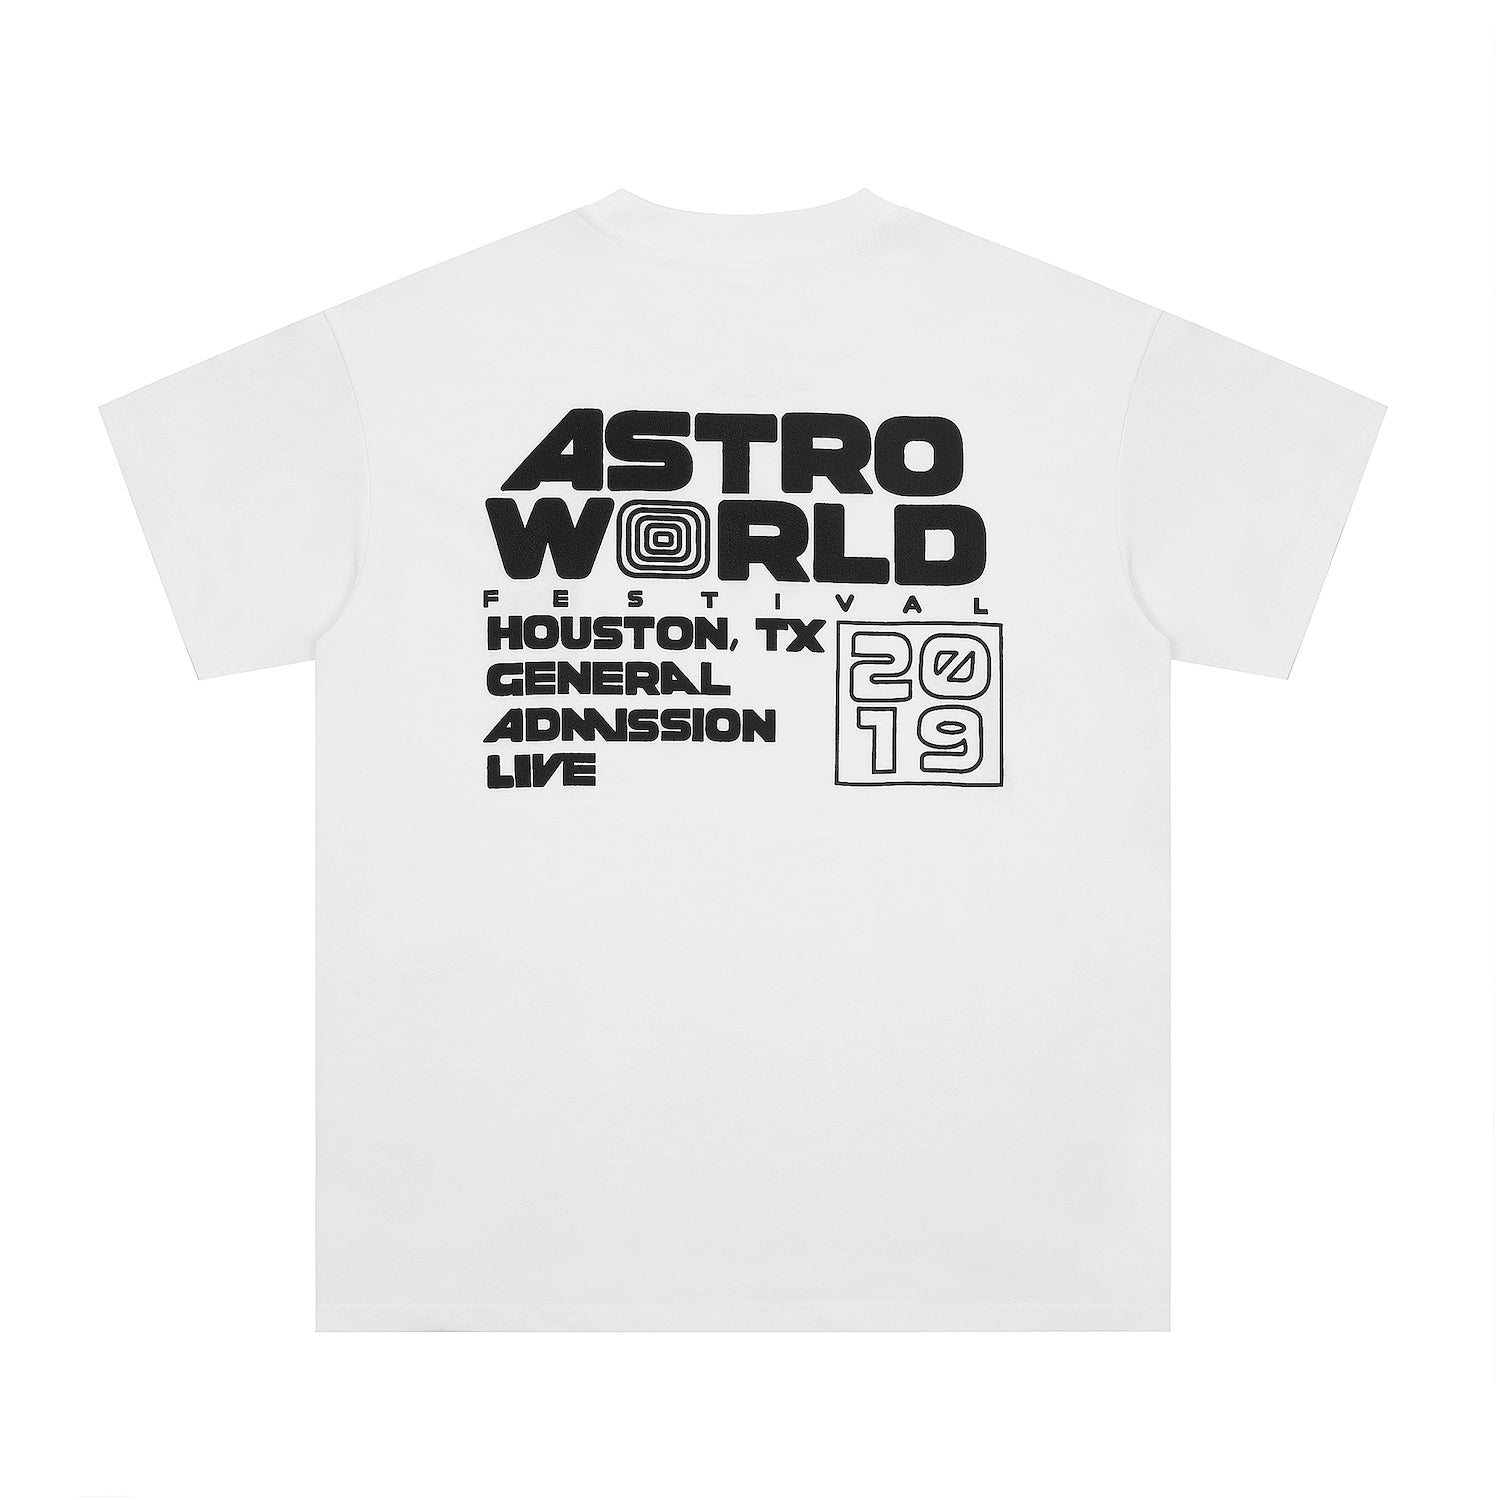 NEW- TRAVIS SCOTT - WELCOME TO ASTRO WORLD - T-SHIRT